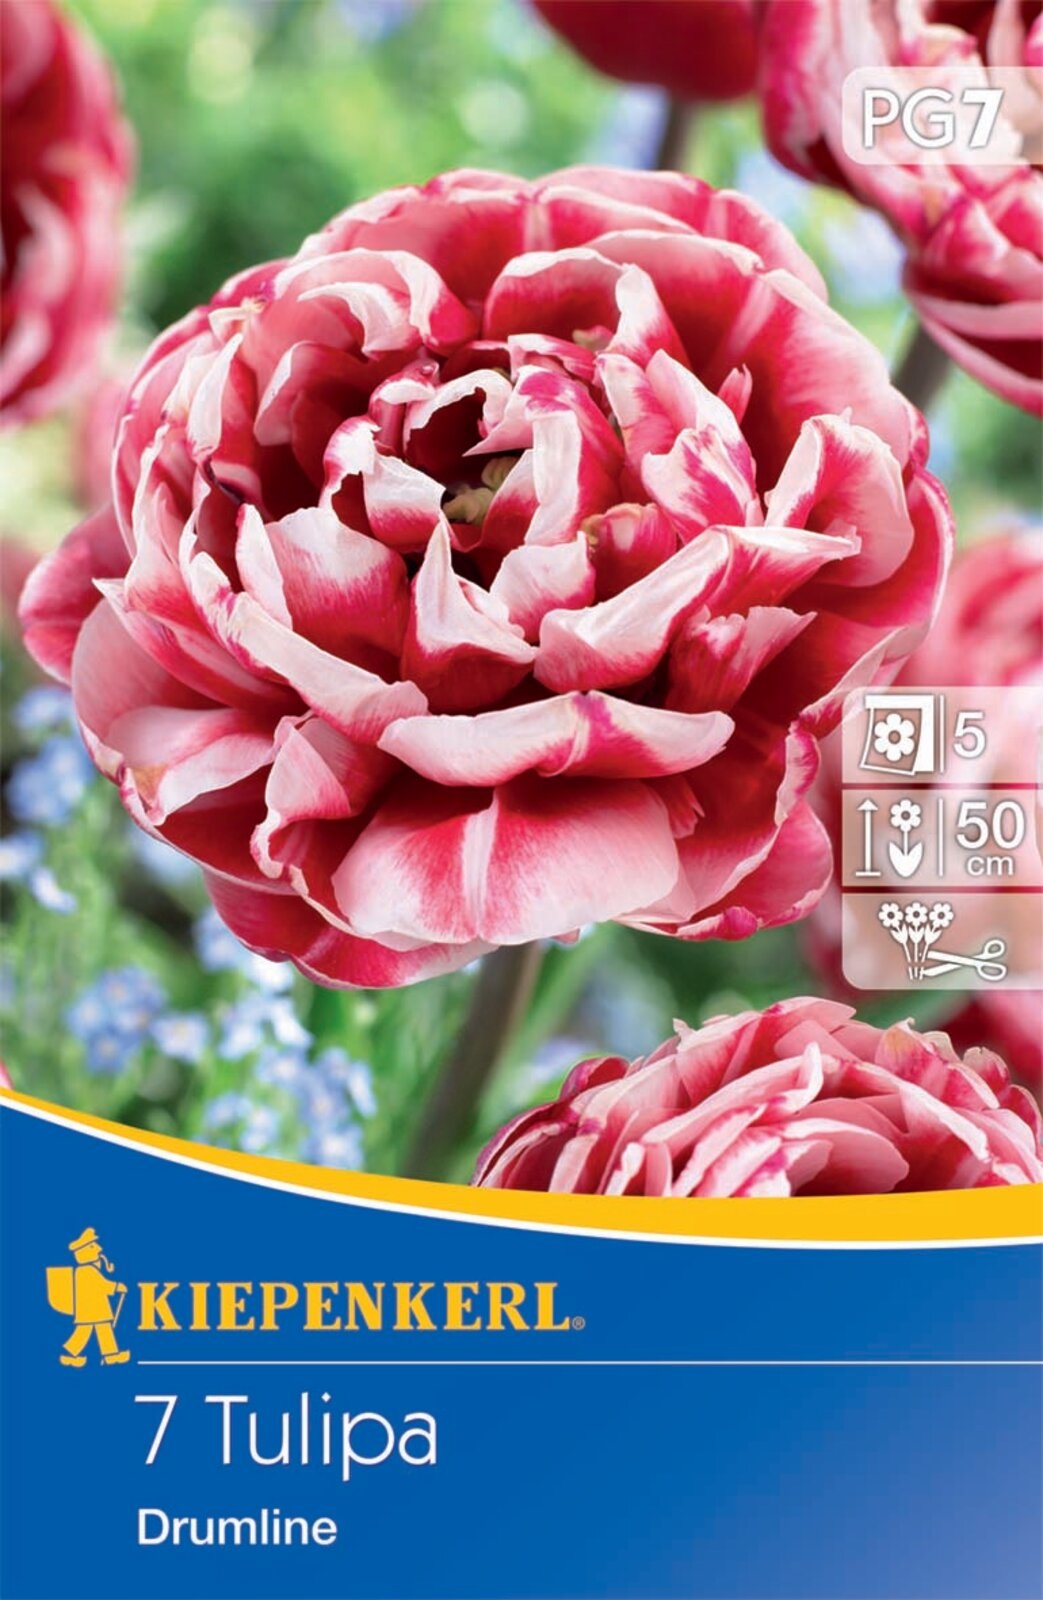 Bulb Tulip with full bloom Drumline 7 pcs Kiepenkerl